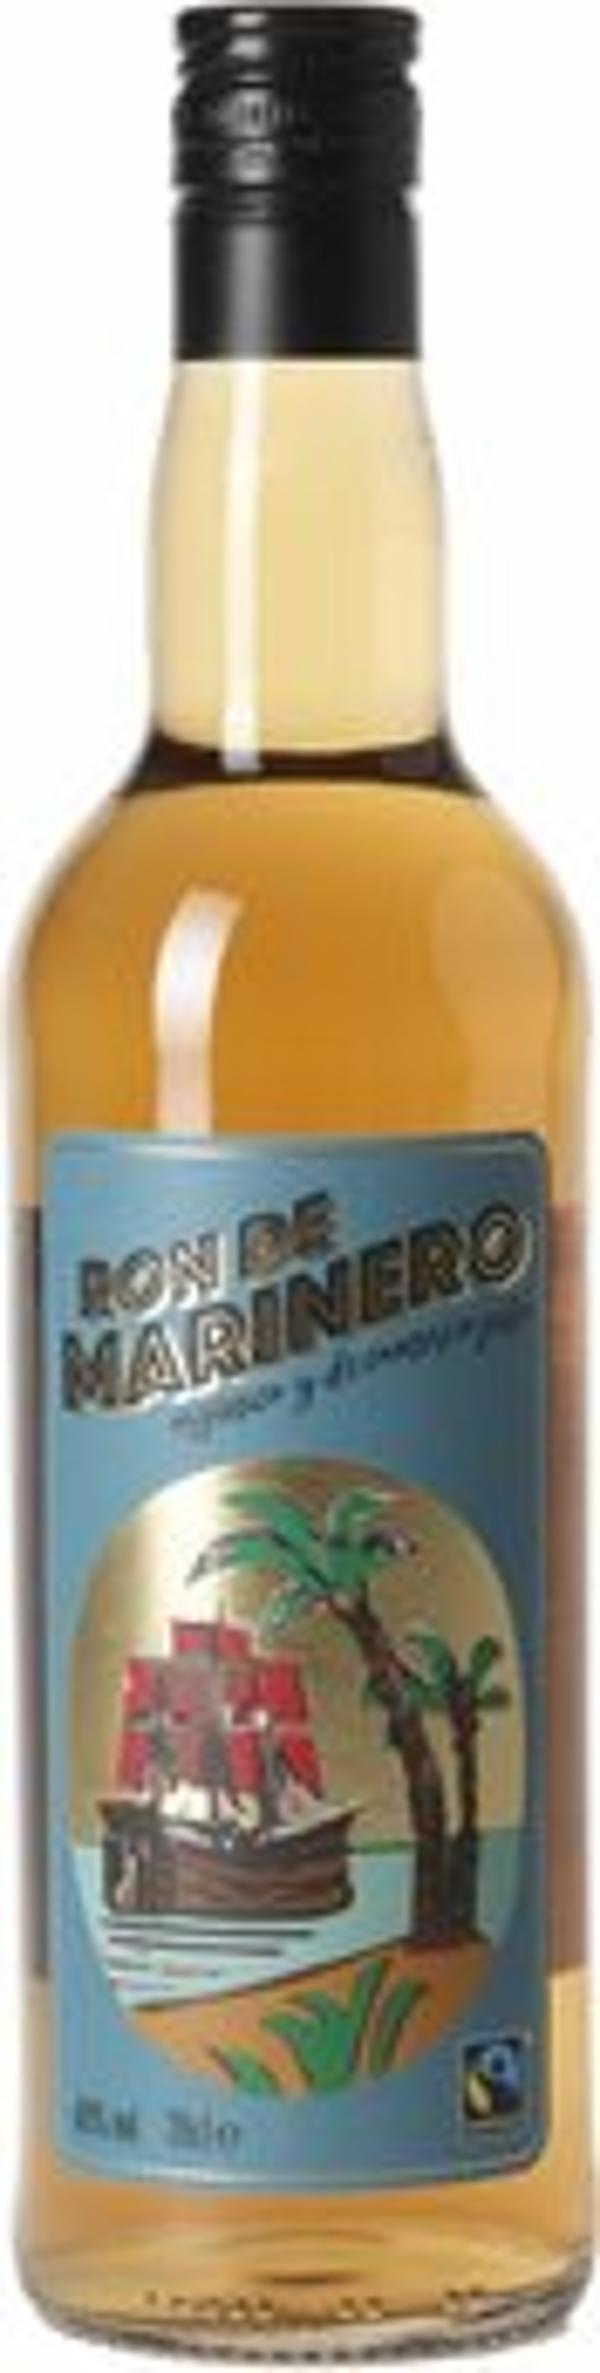 Produktfoto zu Rum Ron de Marinero, 0,7l